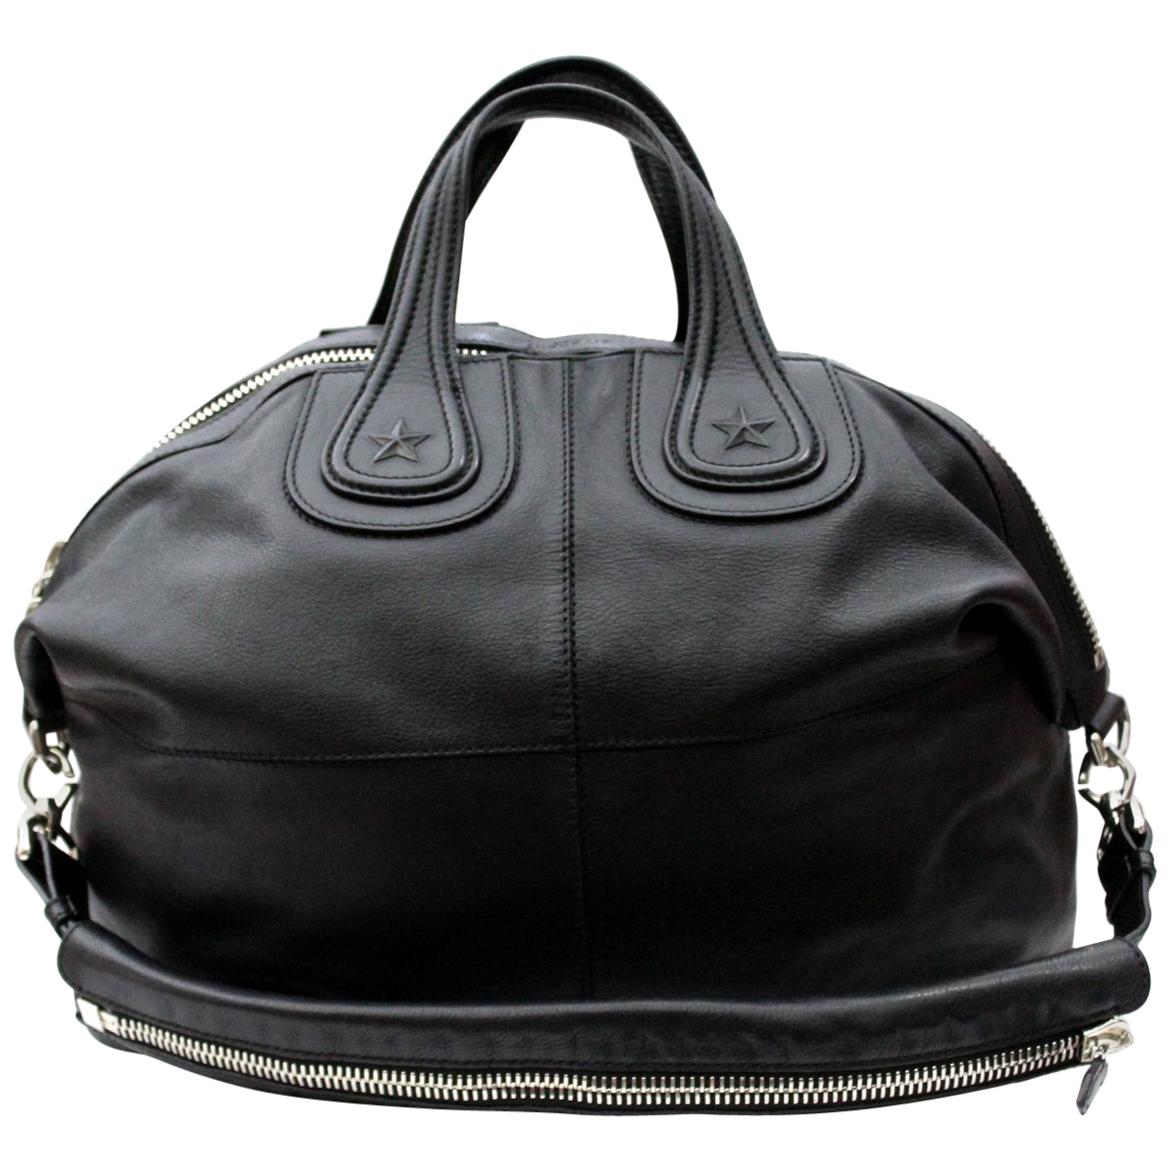 Givenchy Black Leather Nightngale Bag